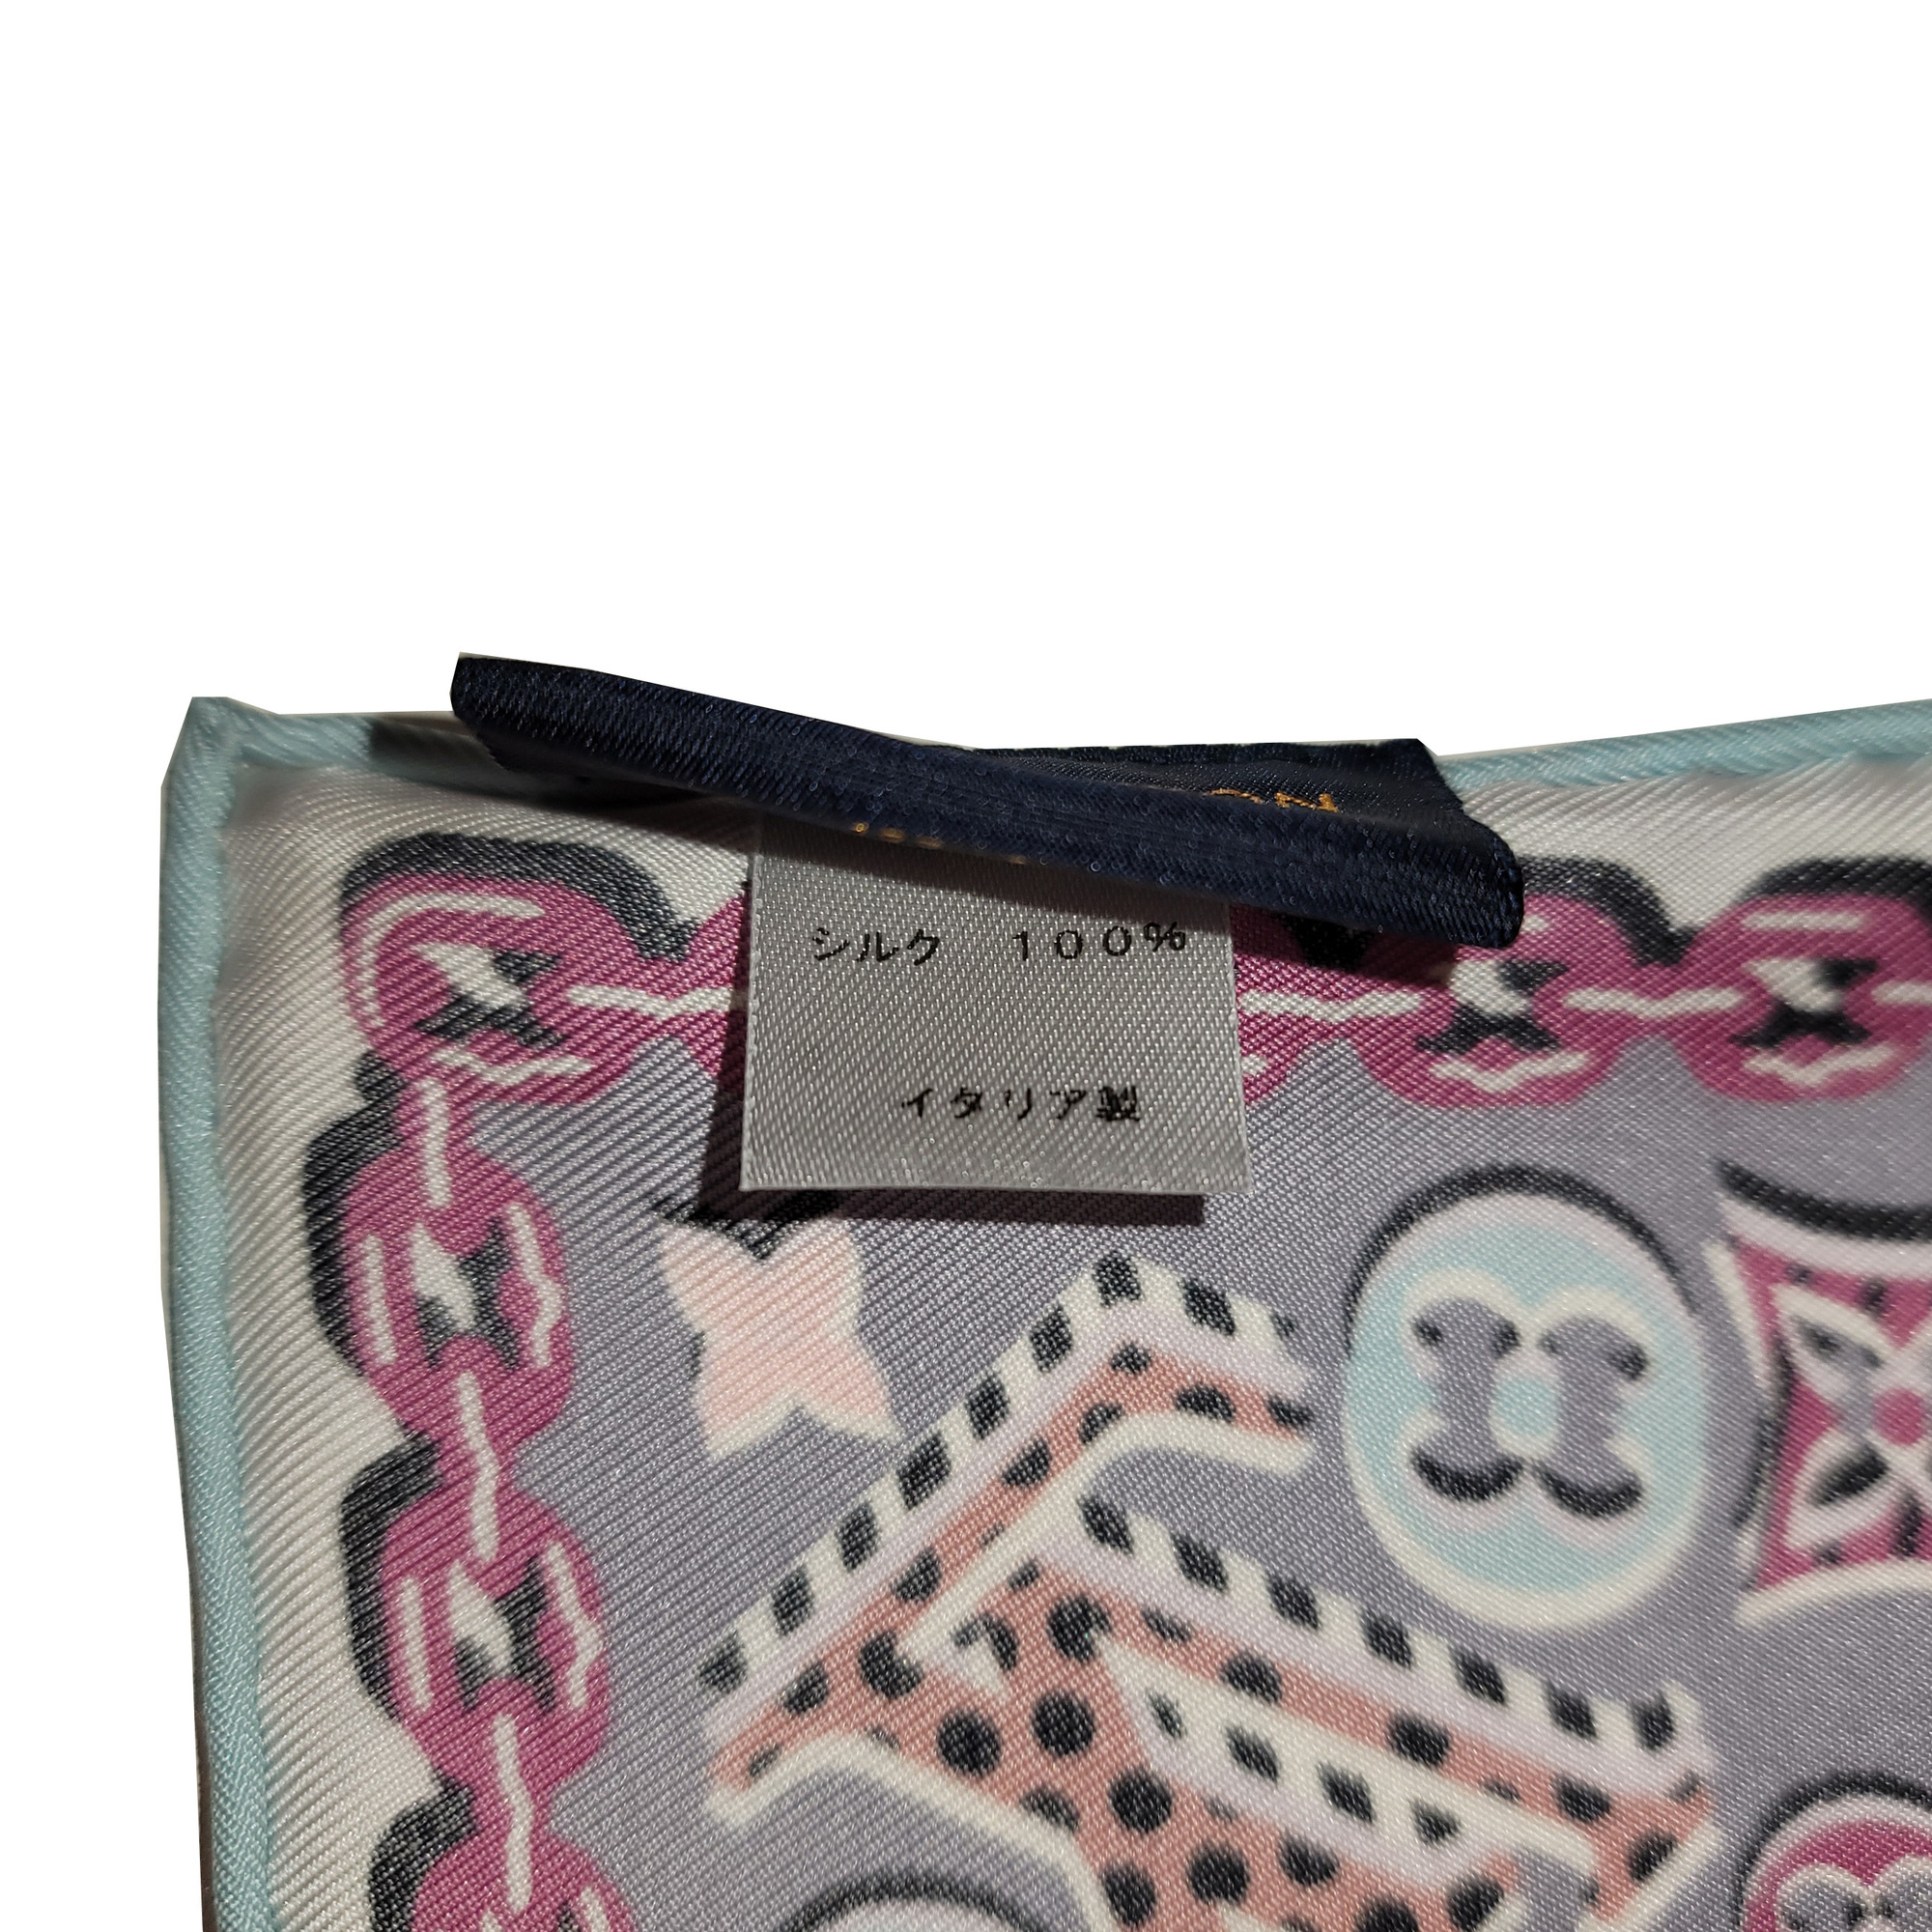 LOUIS VUITTON Monogram Carre 70 M73826 IS0139 Gray Pink Blue Silk Scarf Muffler Multicolor Pattern Handbag Accessory Neck Wrap Collar Ladies